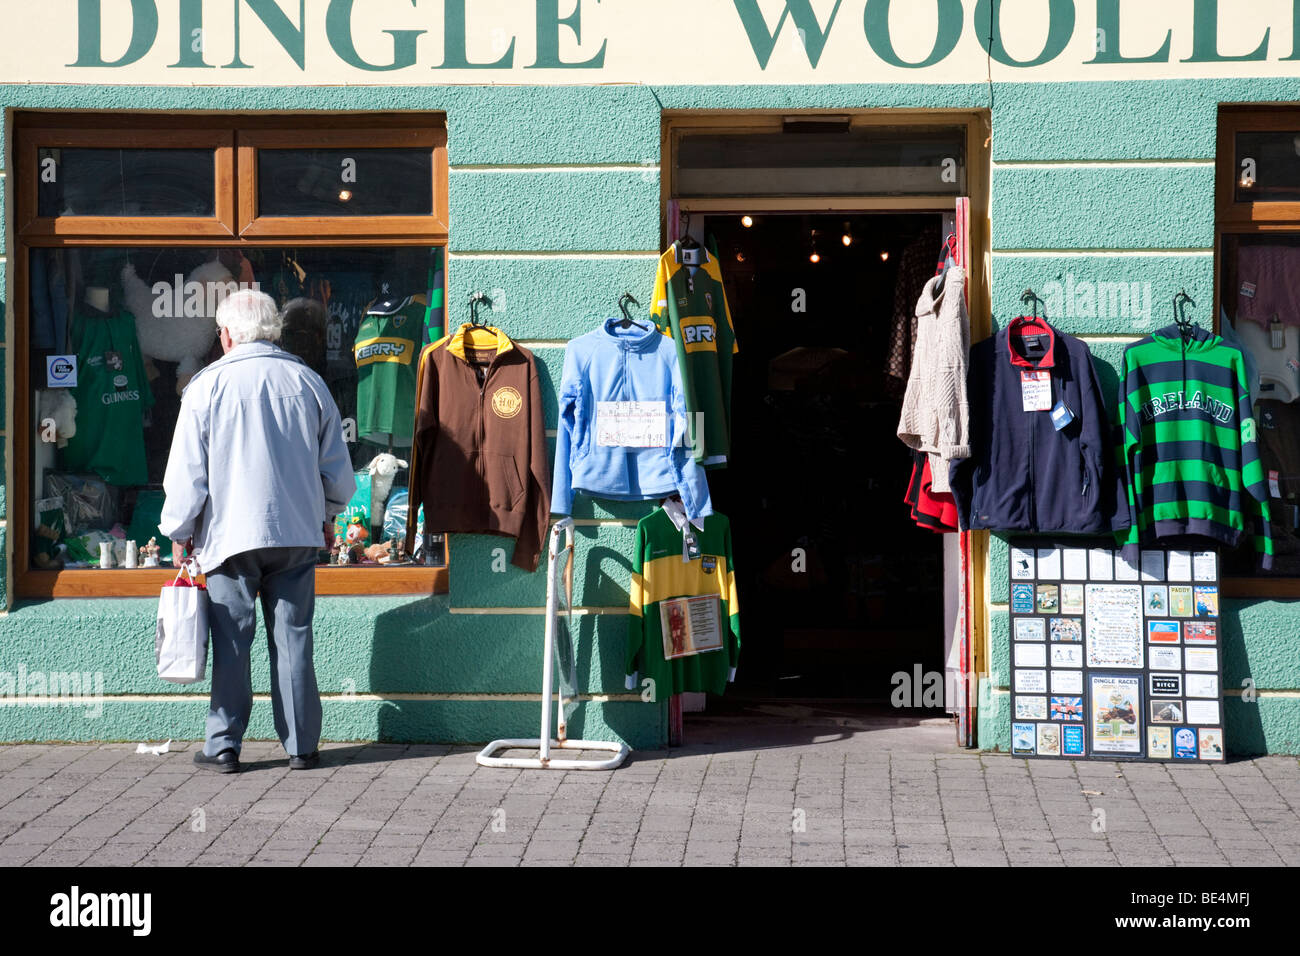 Dingle, County Kerry Irland einkaufen Stockfoto